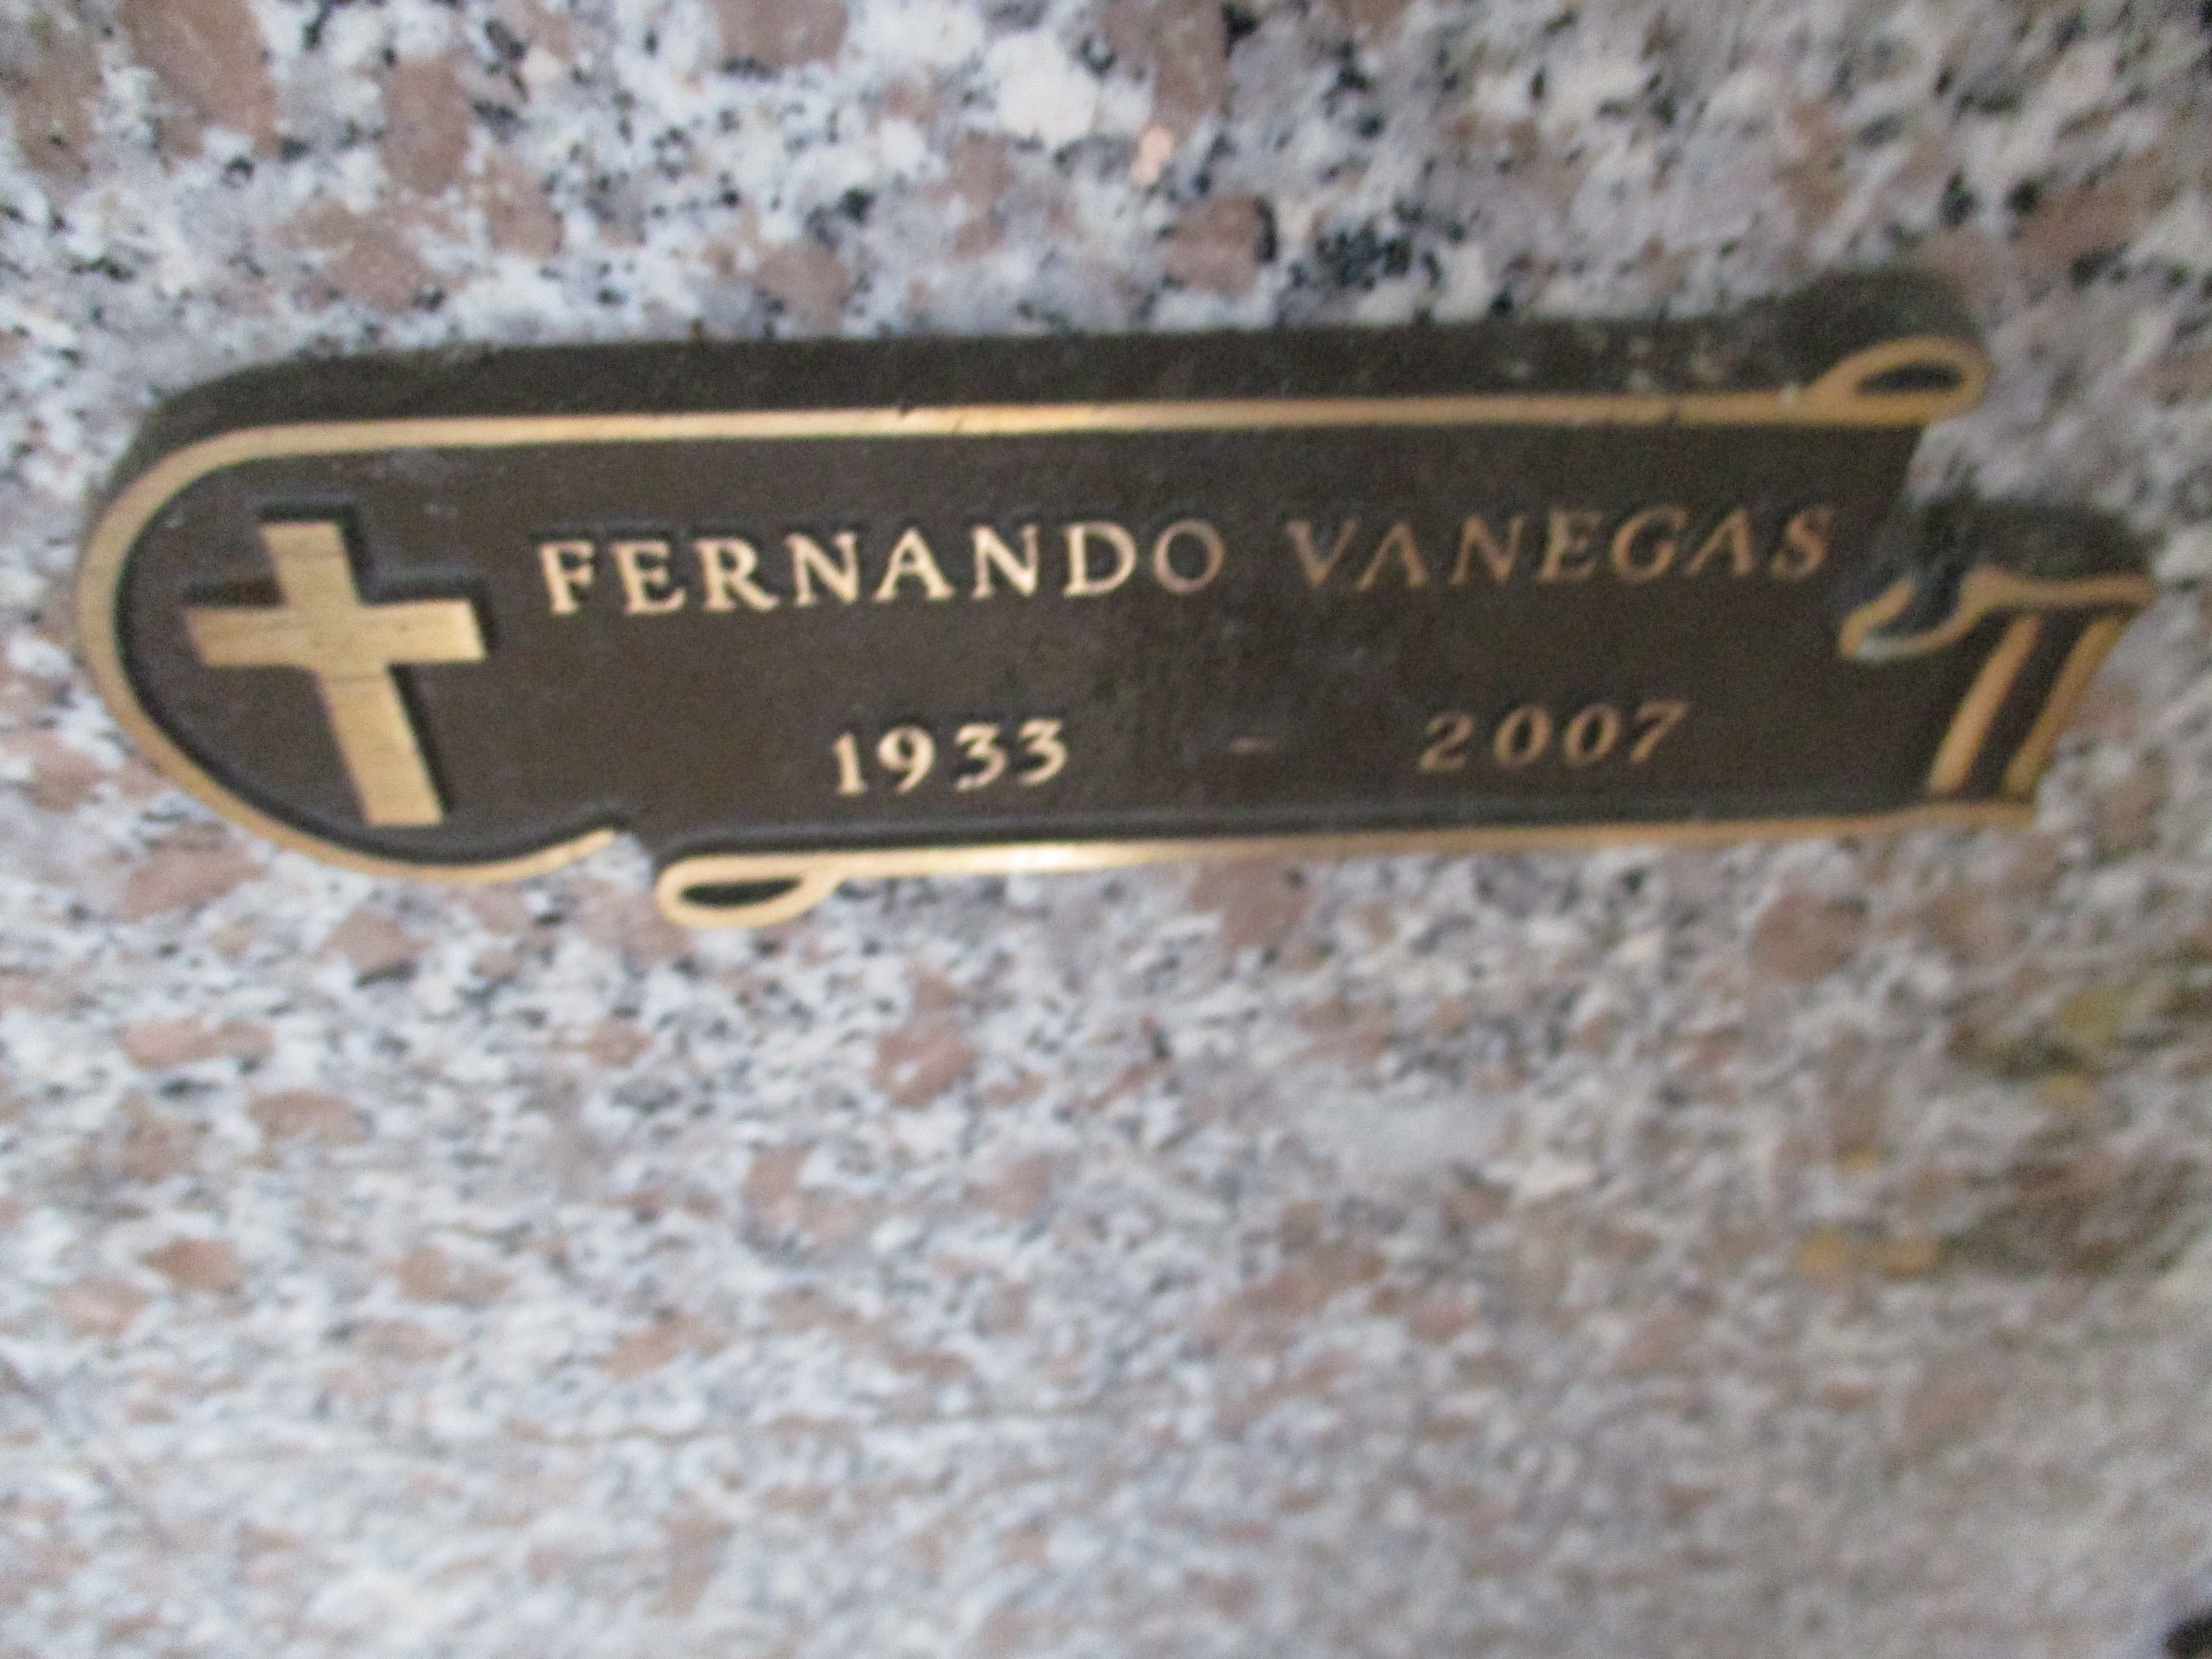 Fernando Vanegas